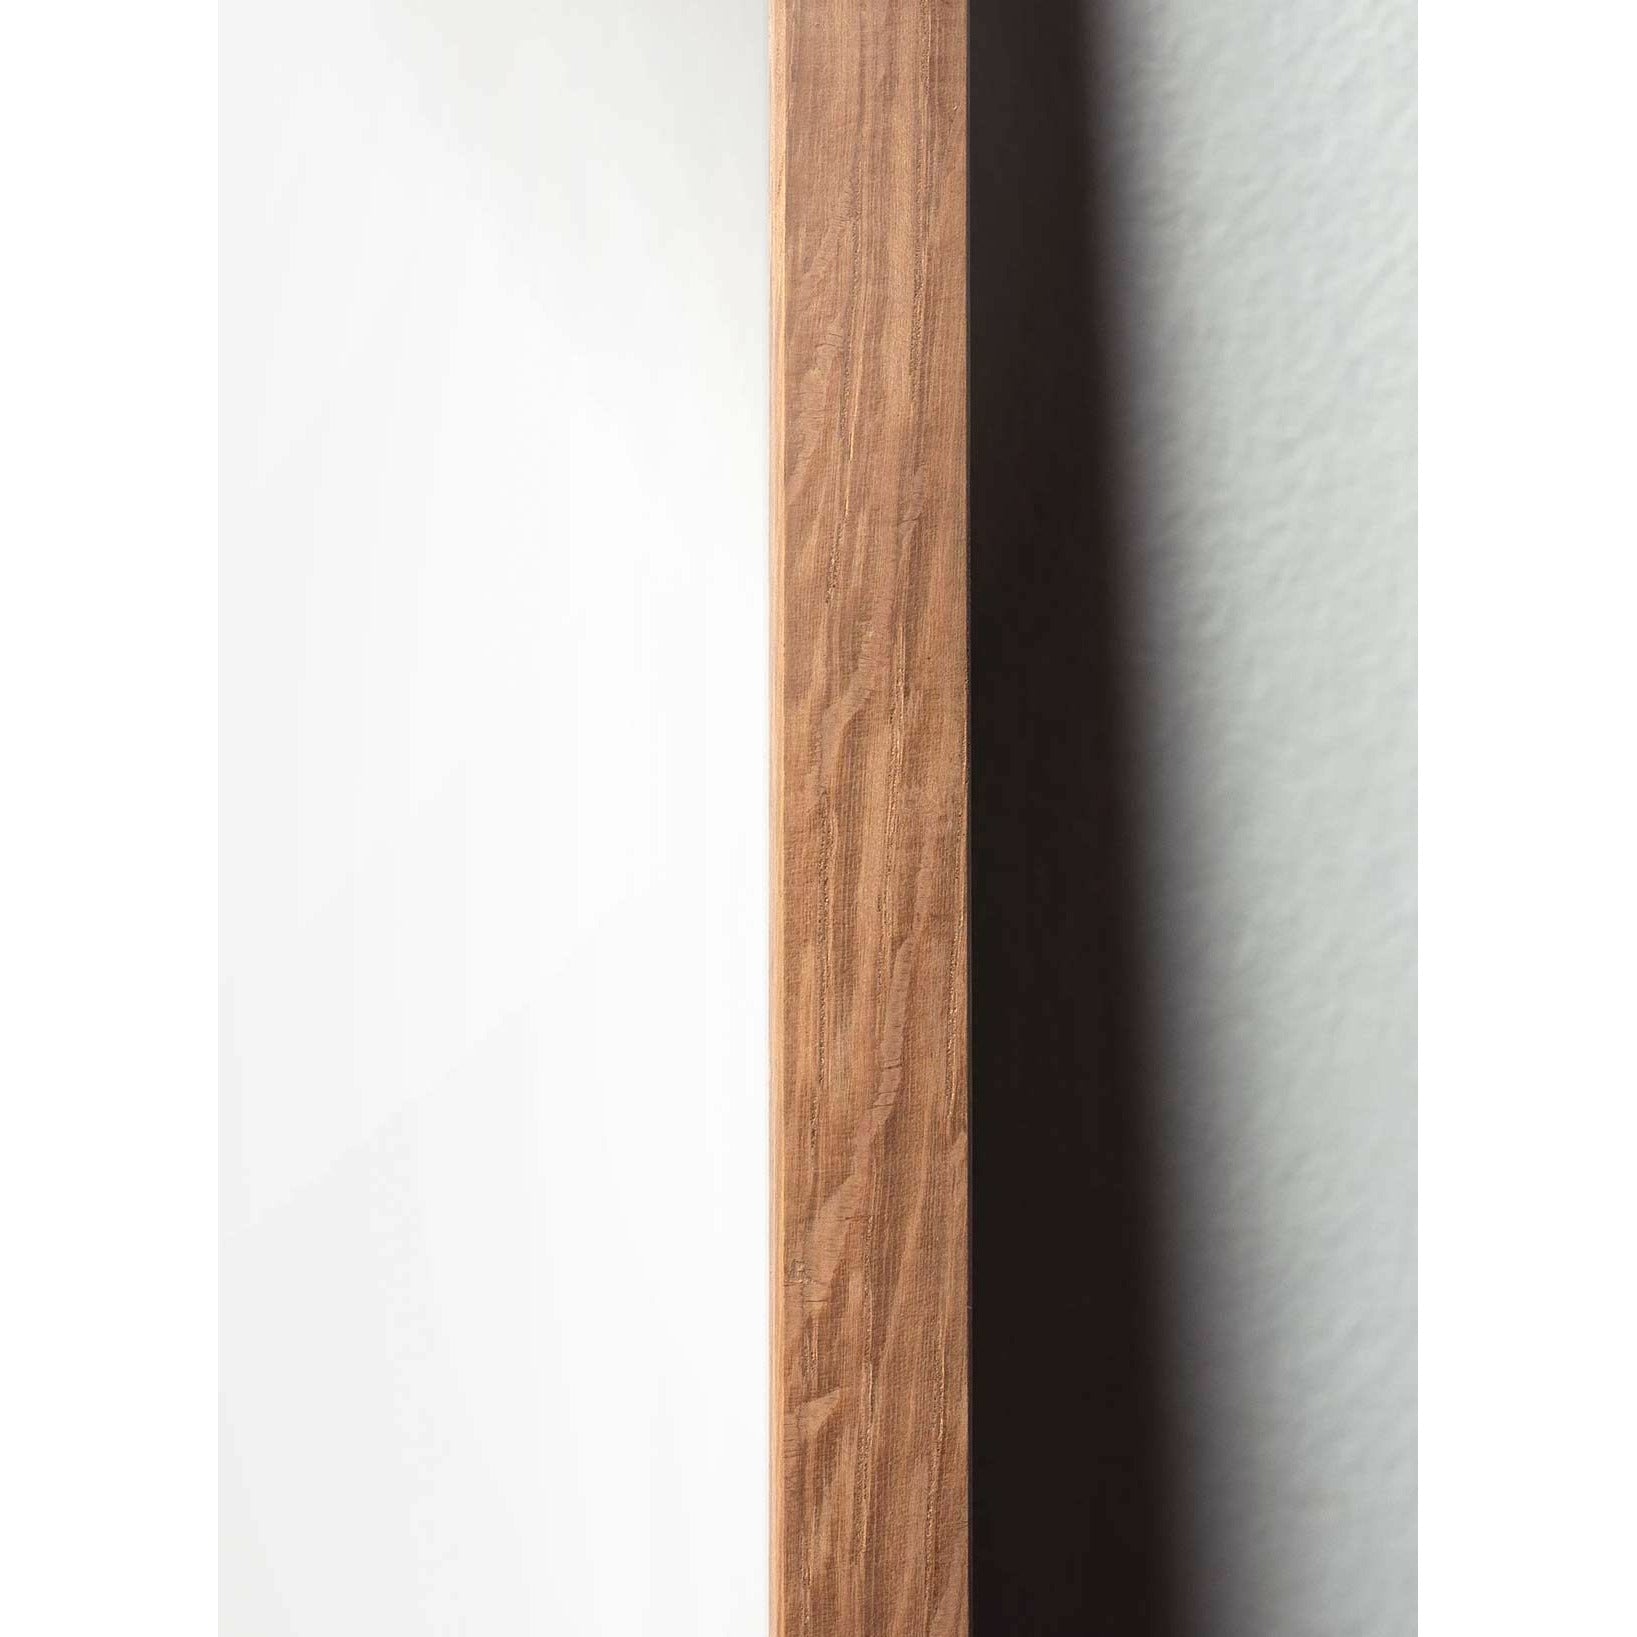 Brainchild Äggfigursaffisch, ram i lätt trä 30x40 cm, brunt